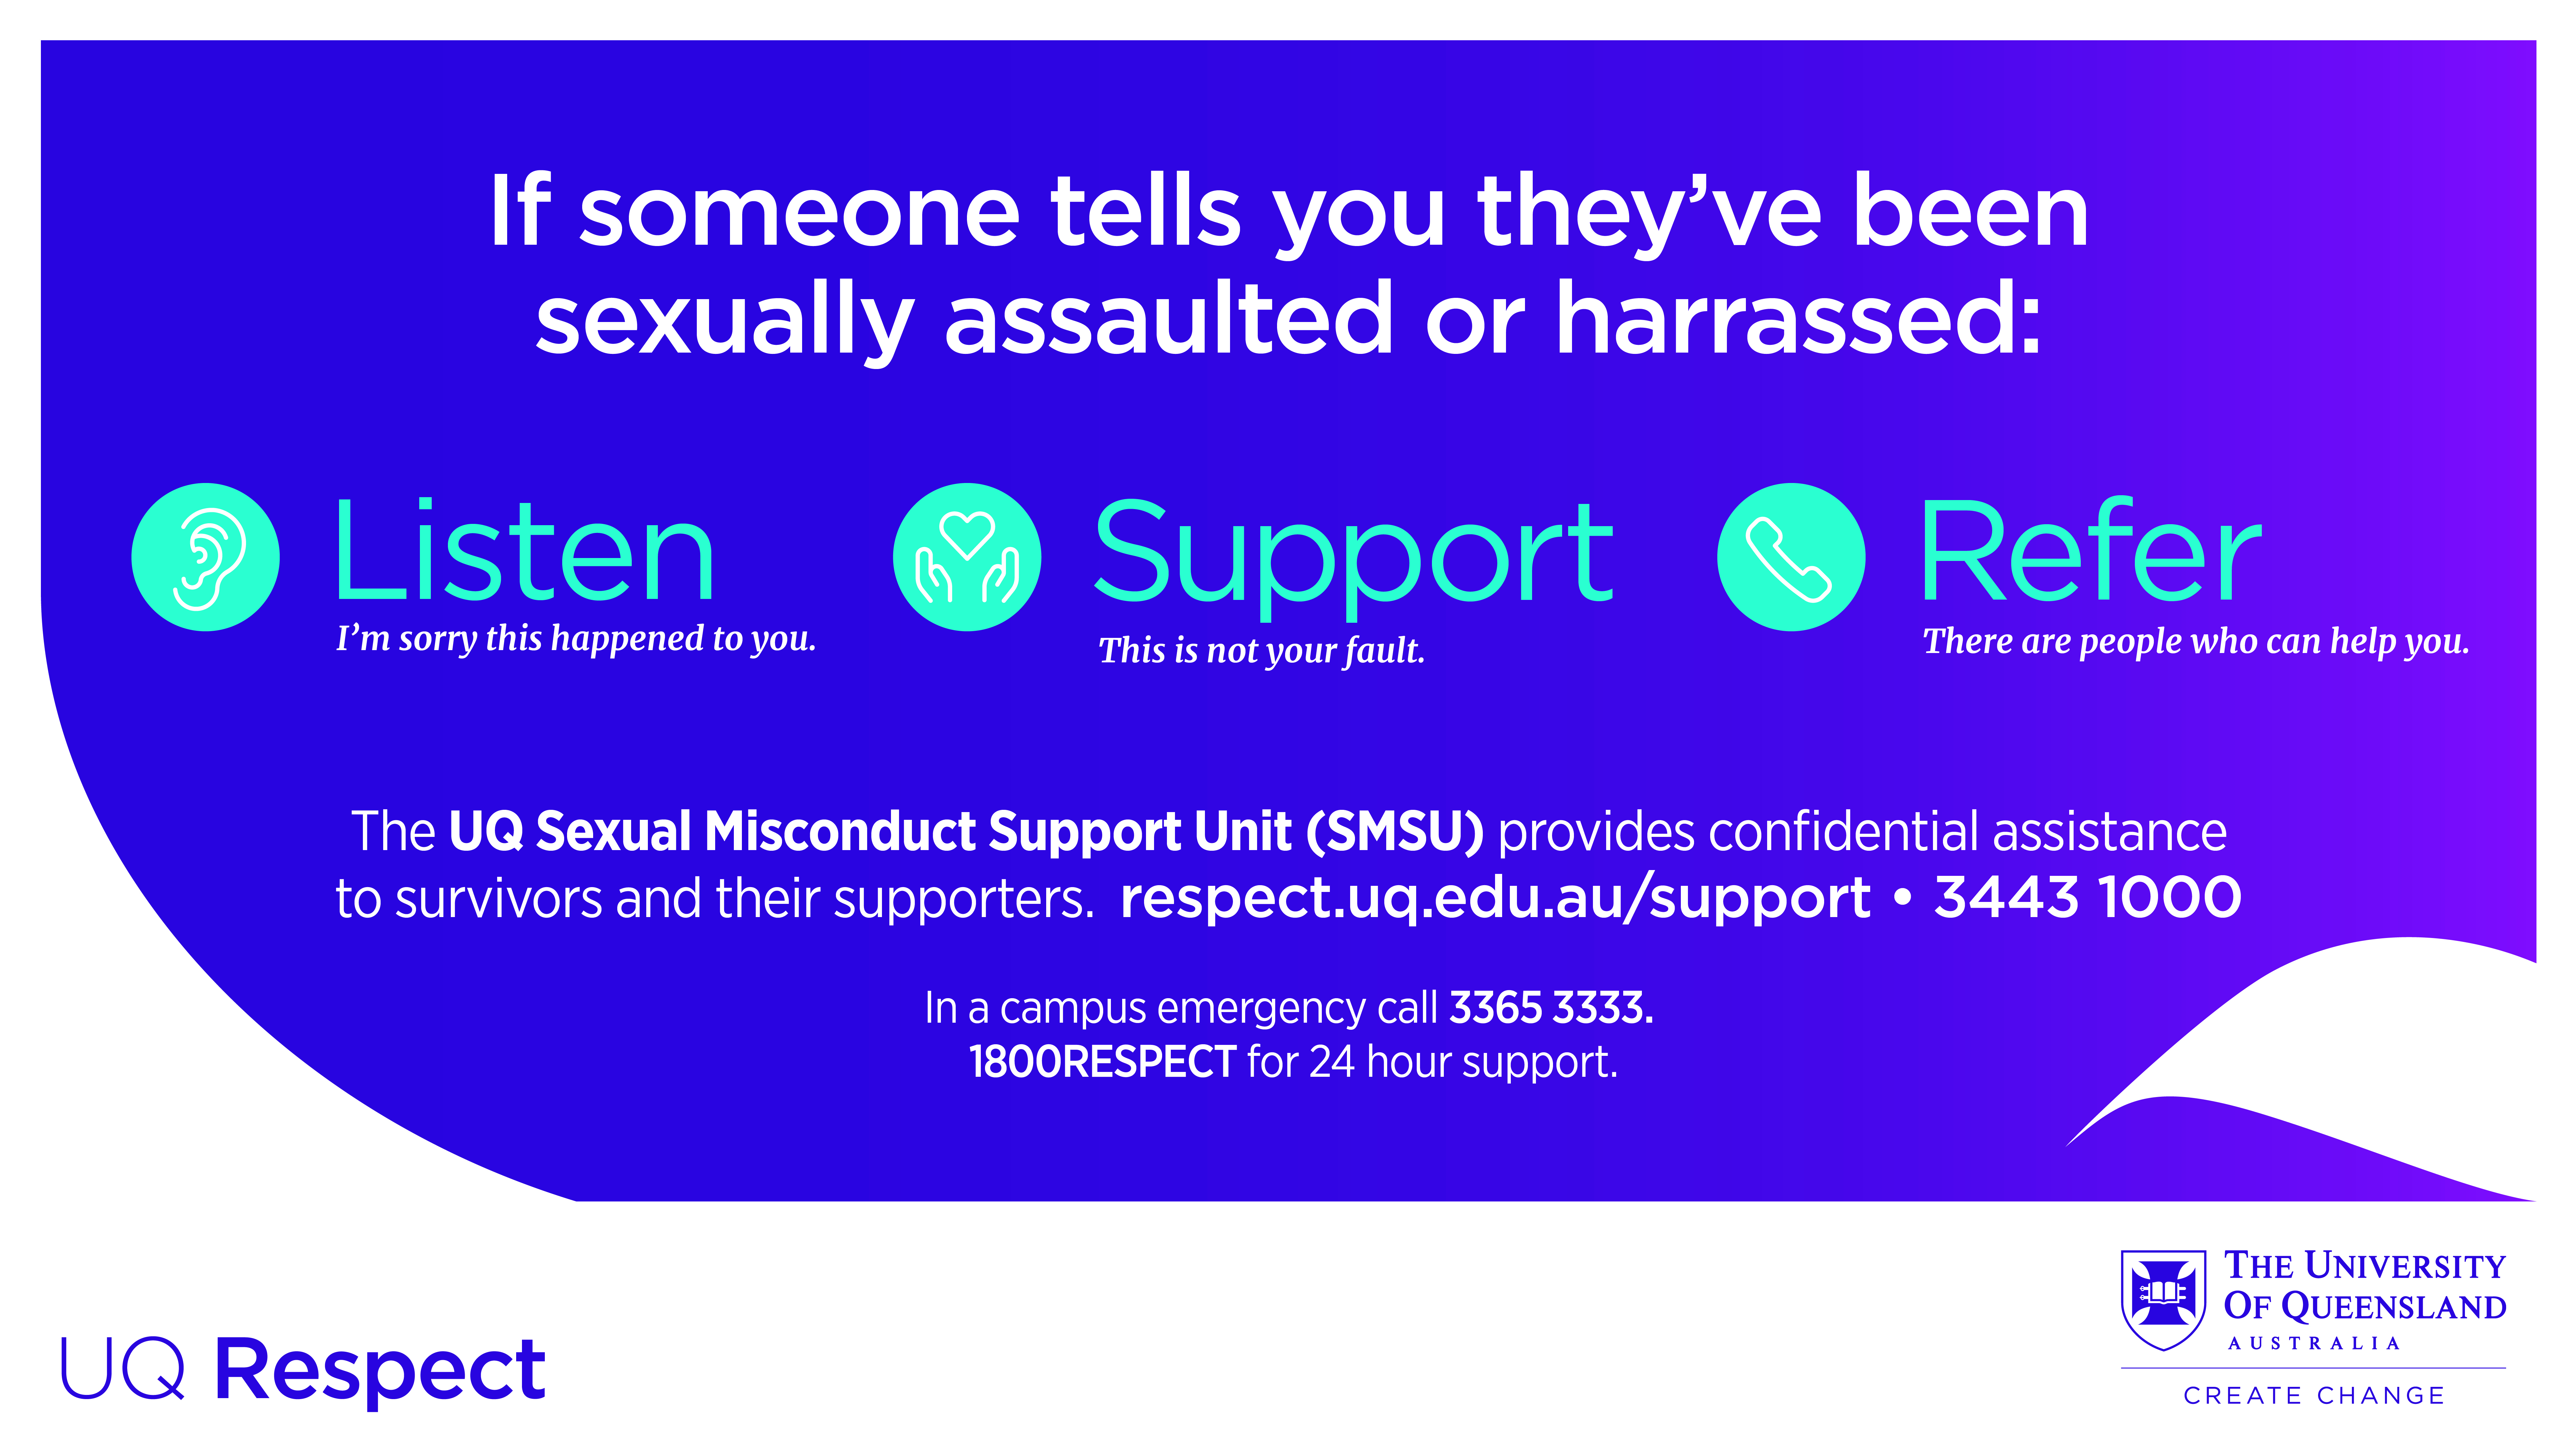 listen support refer campaign banner